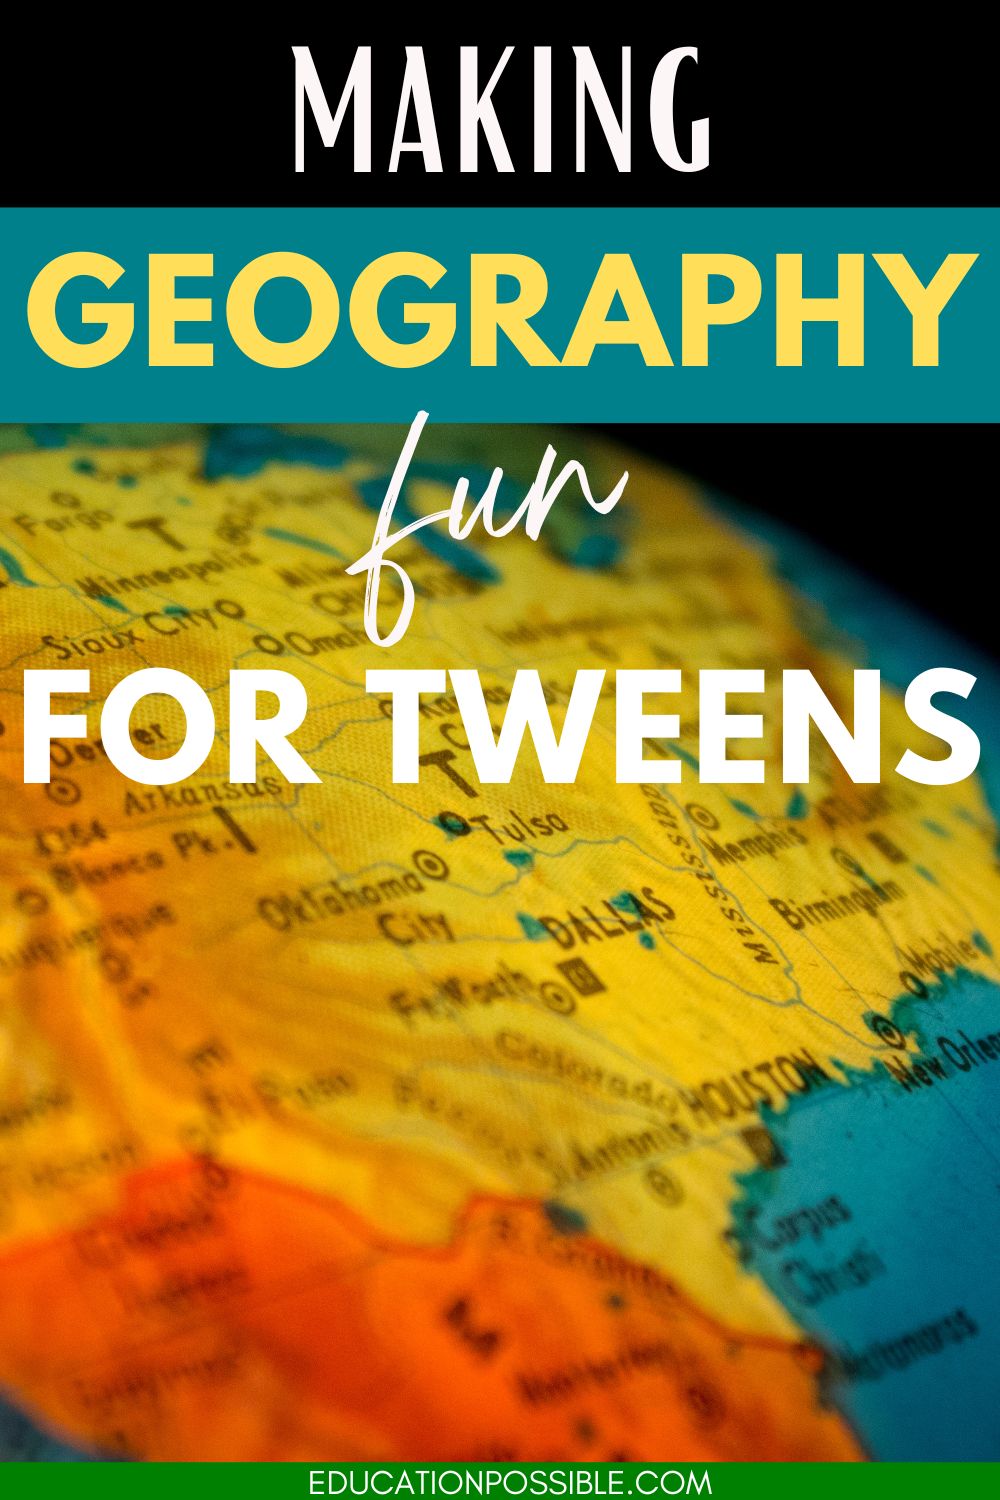 Making Geography Fun for Tweens